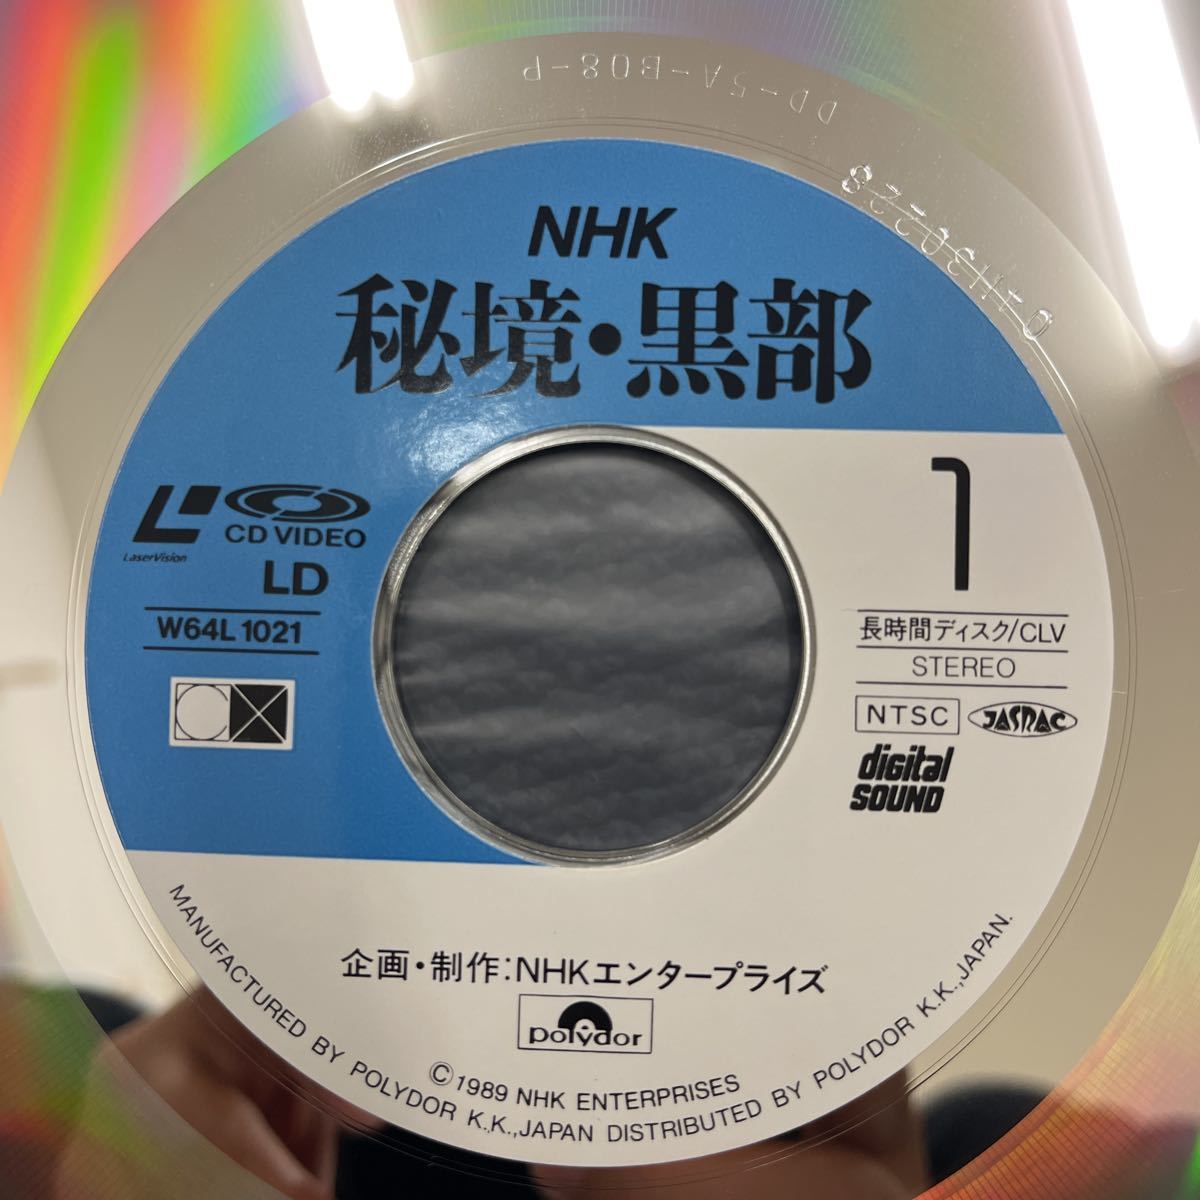 31802-169 0930N LD laser disk NHK..* black part obi attaching operation not yet verification 